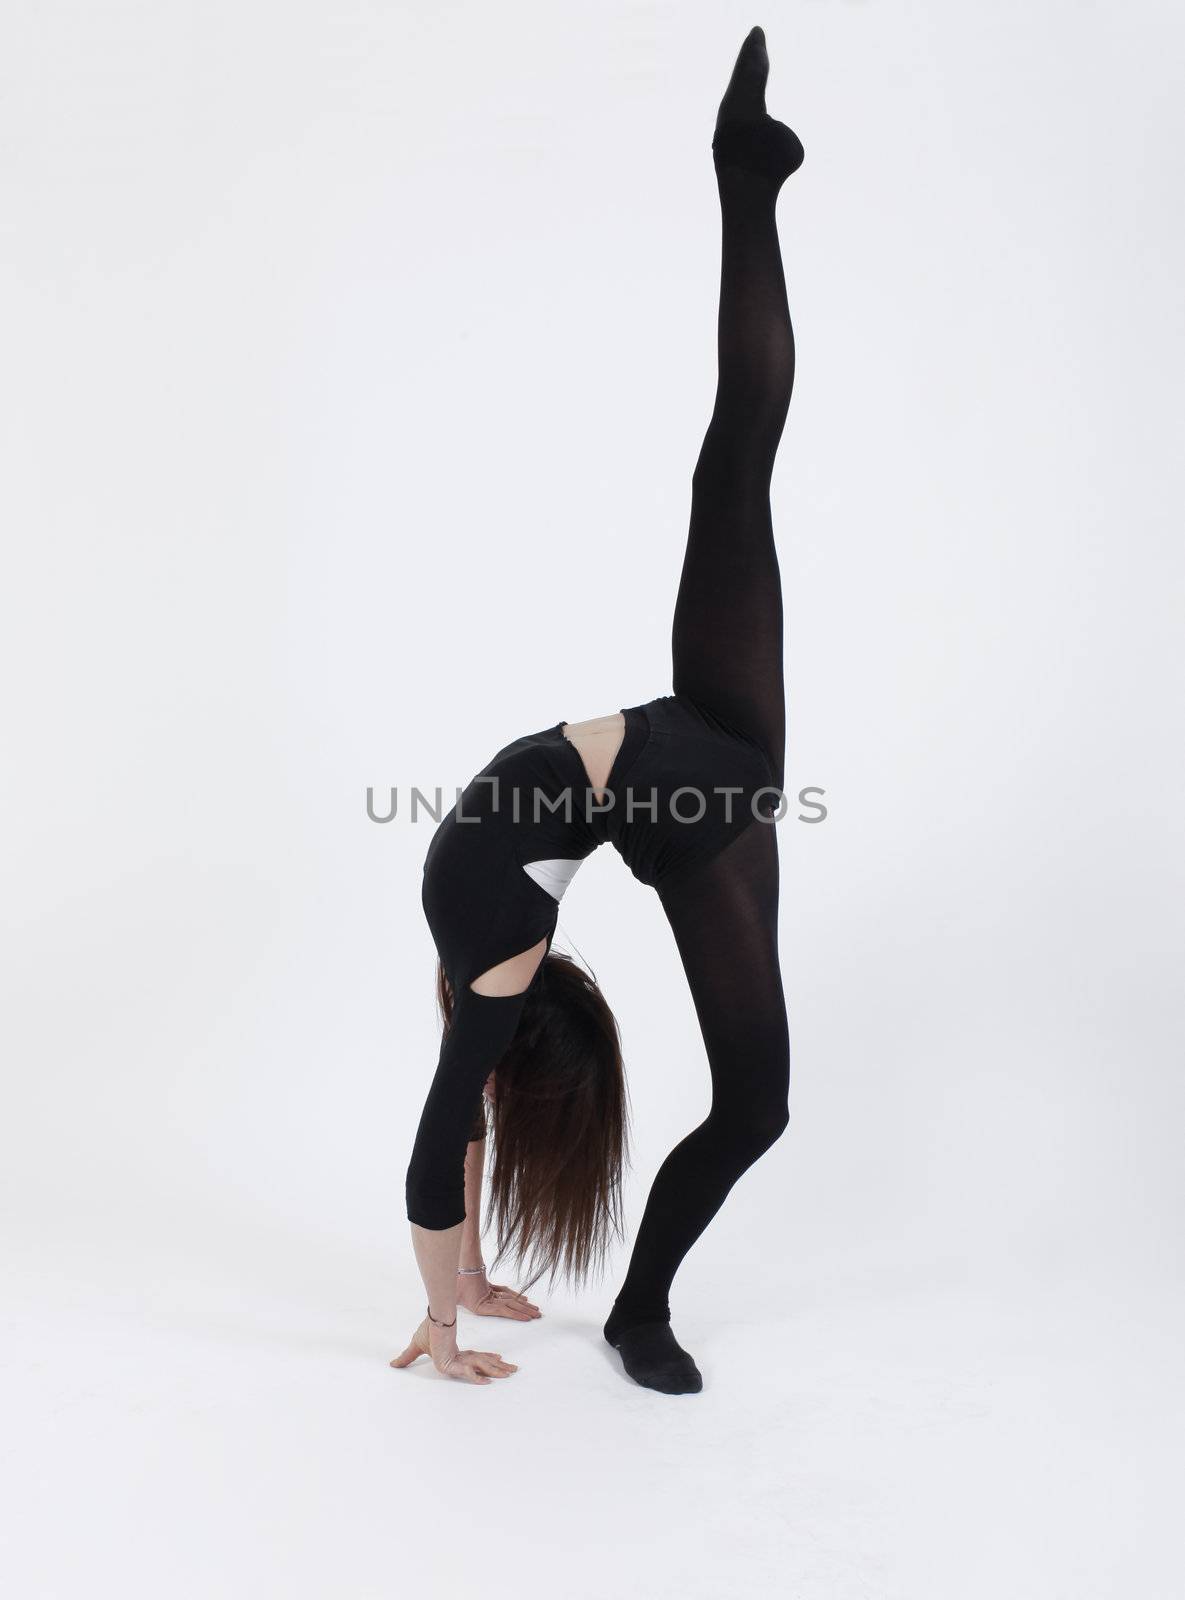 the gymnast by macintox